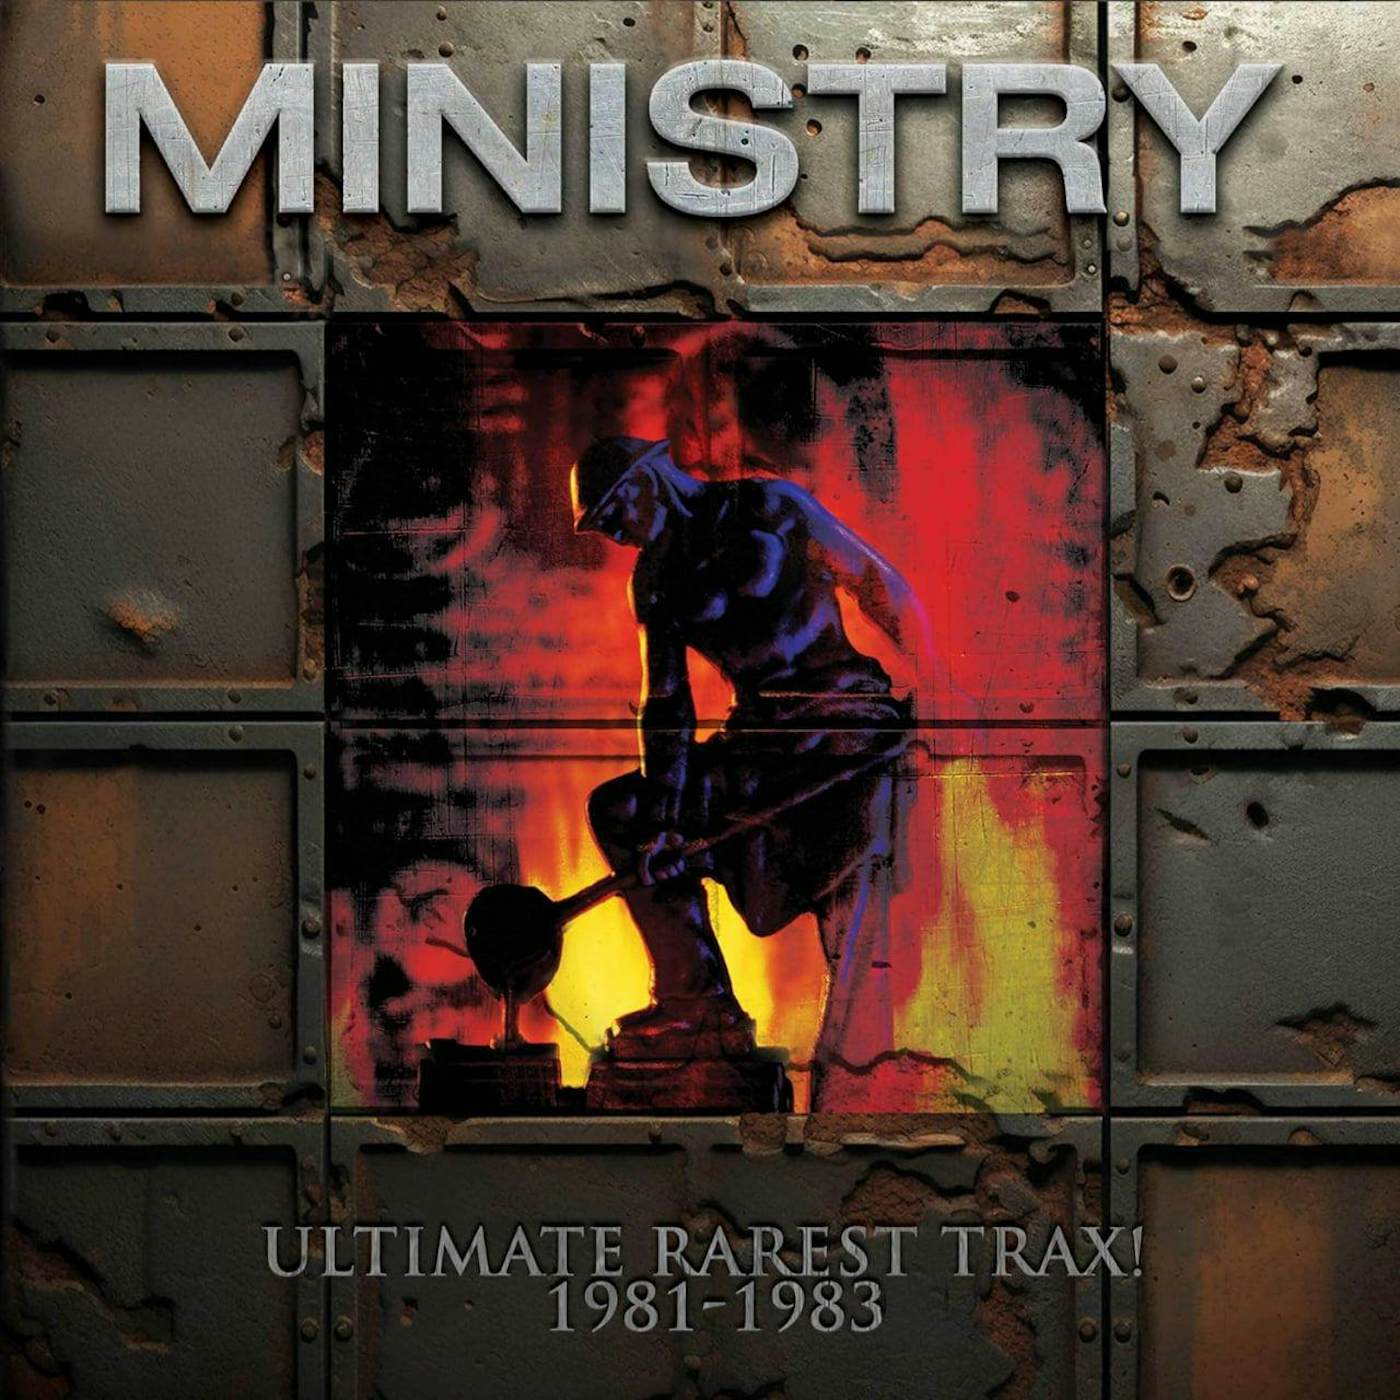 Ministry Ultimate Rarest Trax! 1981-1983 (2LP/White) Vinyl Record